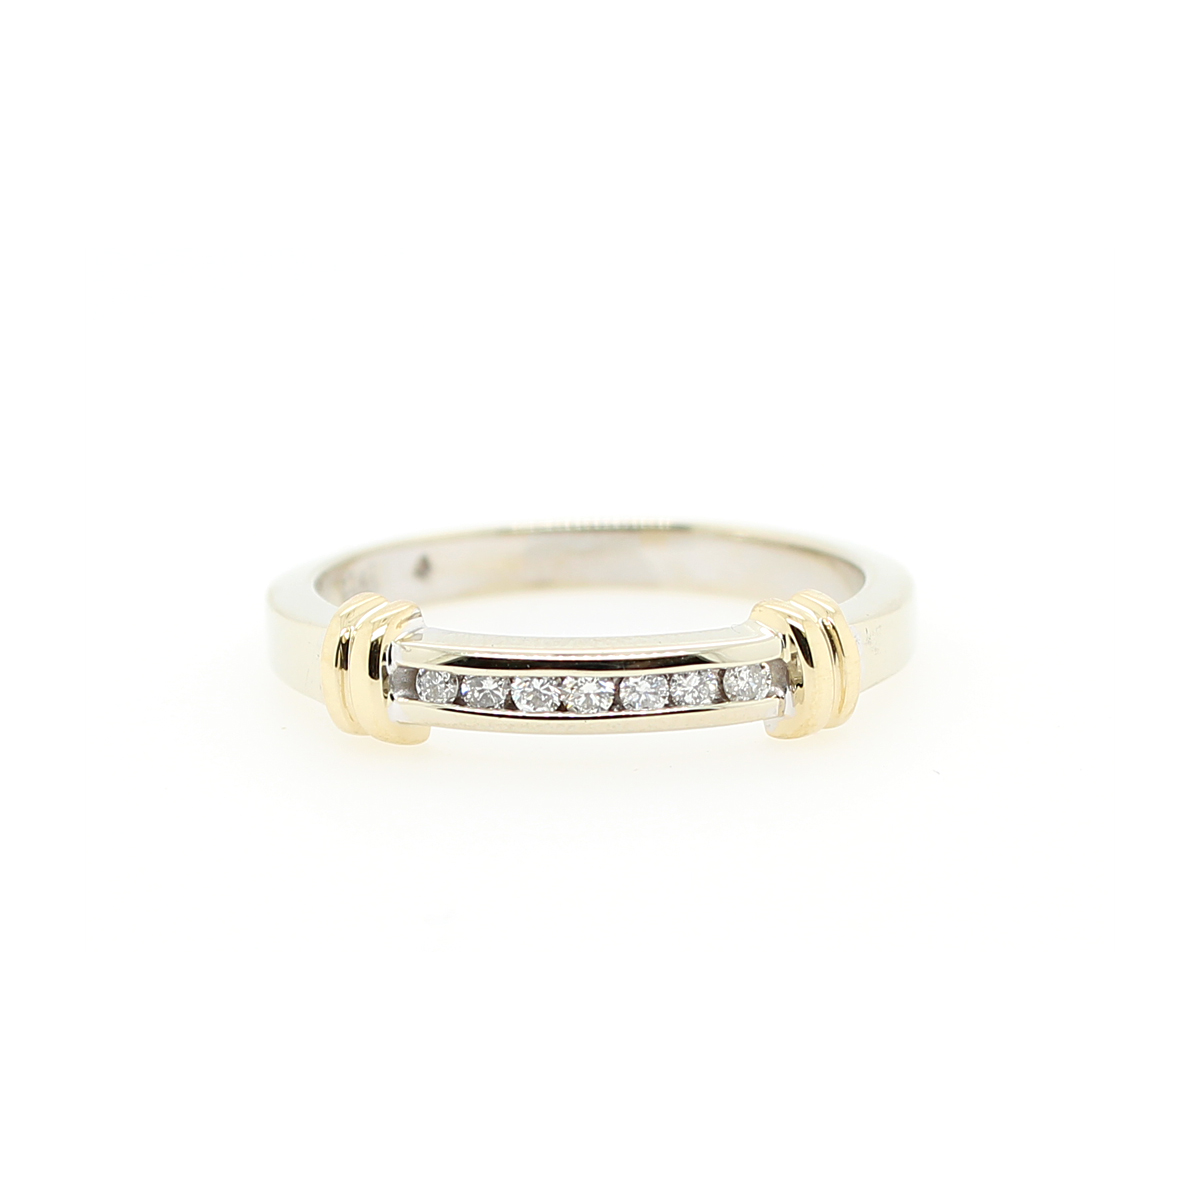 Vintage 10 Karat White Gold Channel Set Diamond Ring